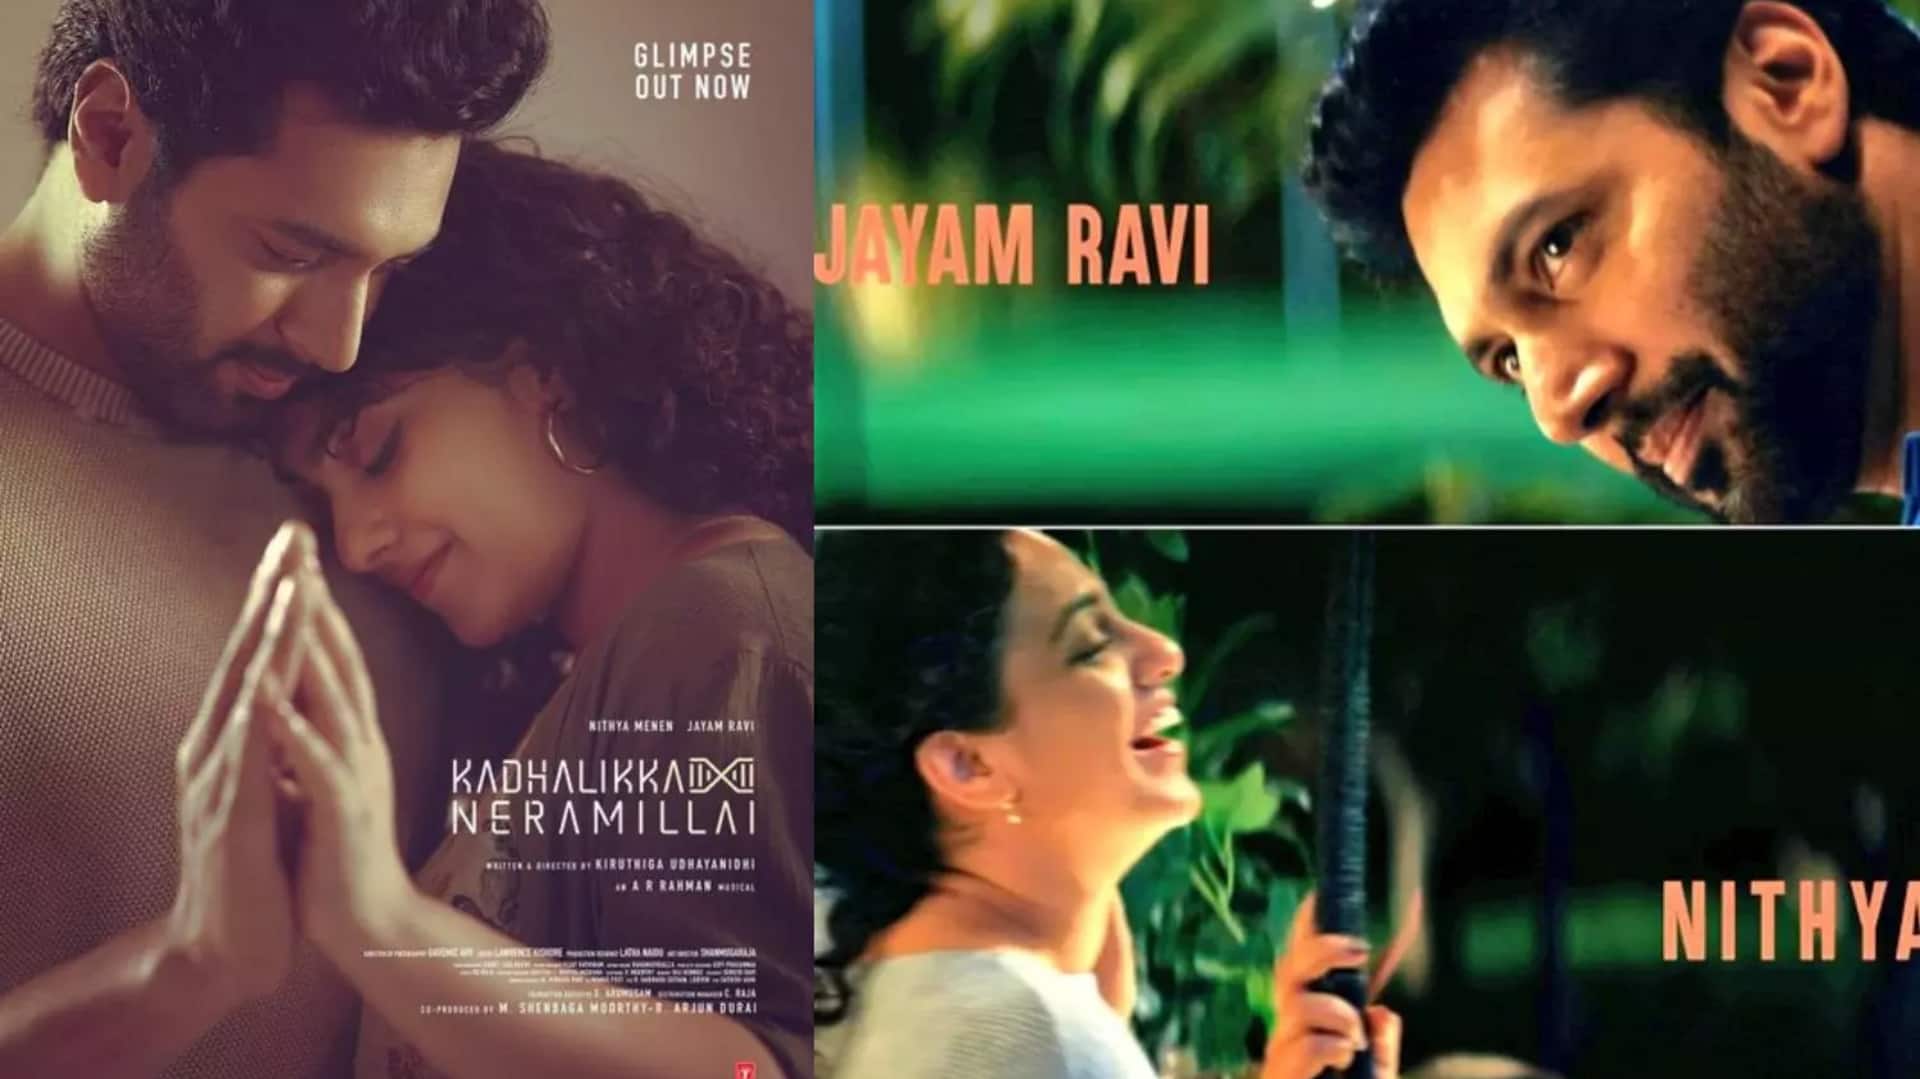 Jayam Ravi, Nithya Menen's chemistry shines in 'Kadhalikka Neramillai' teaser